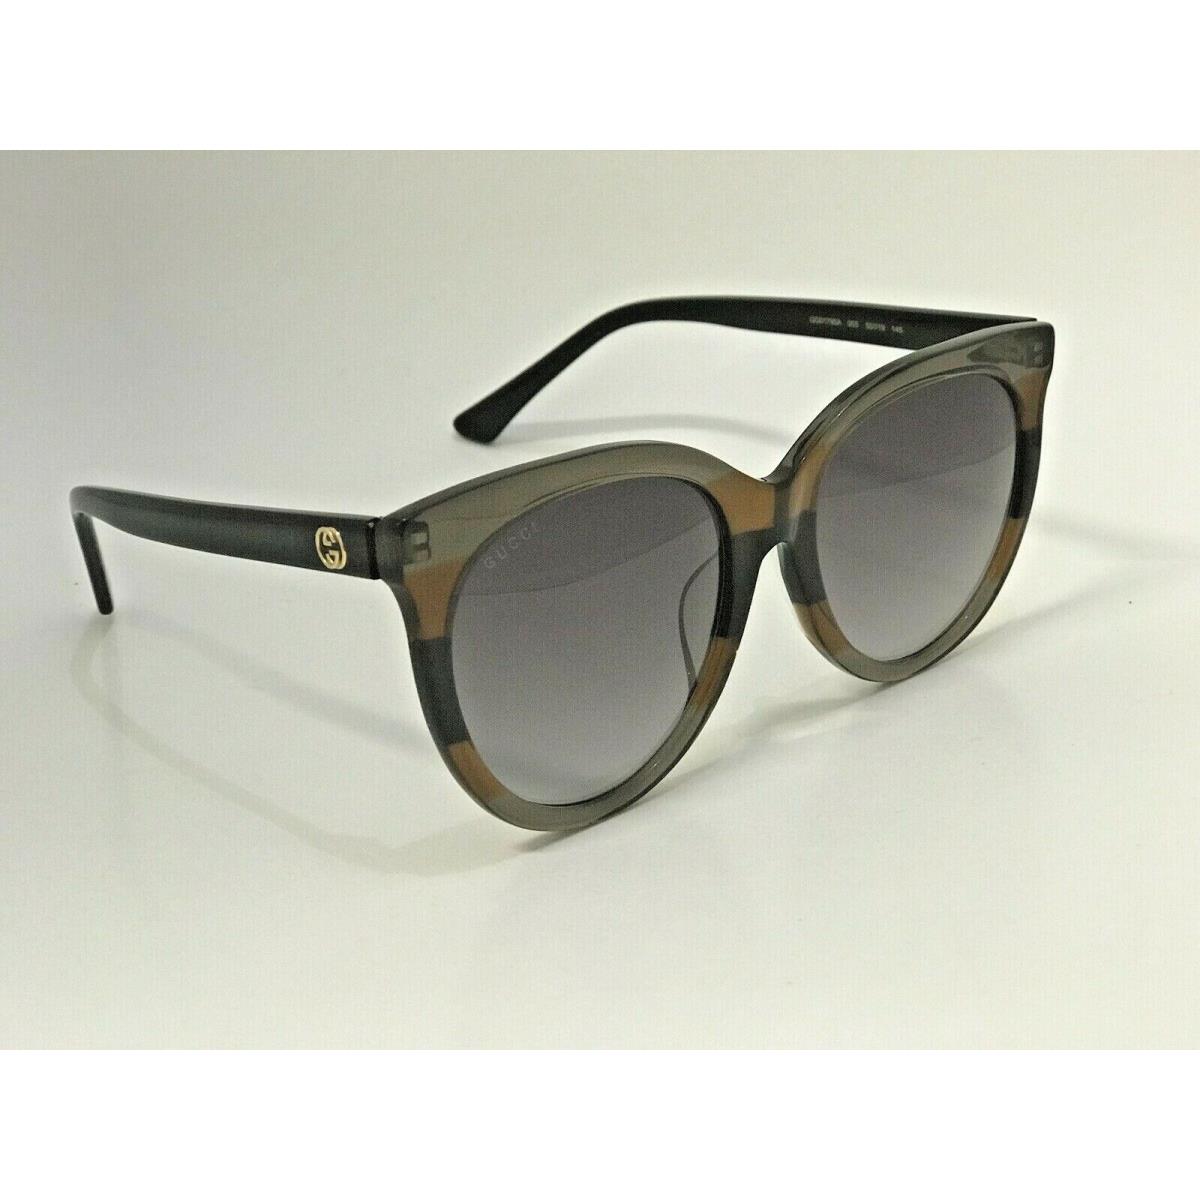 Gucci sunglasses  - Brown , Multicolor Frame, Brown Lens